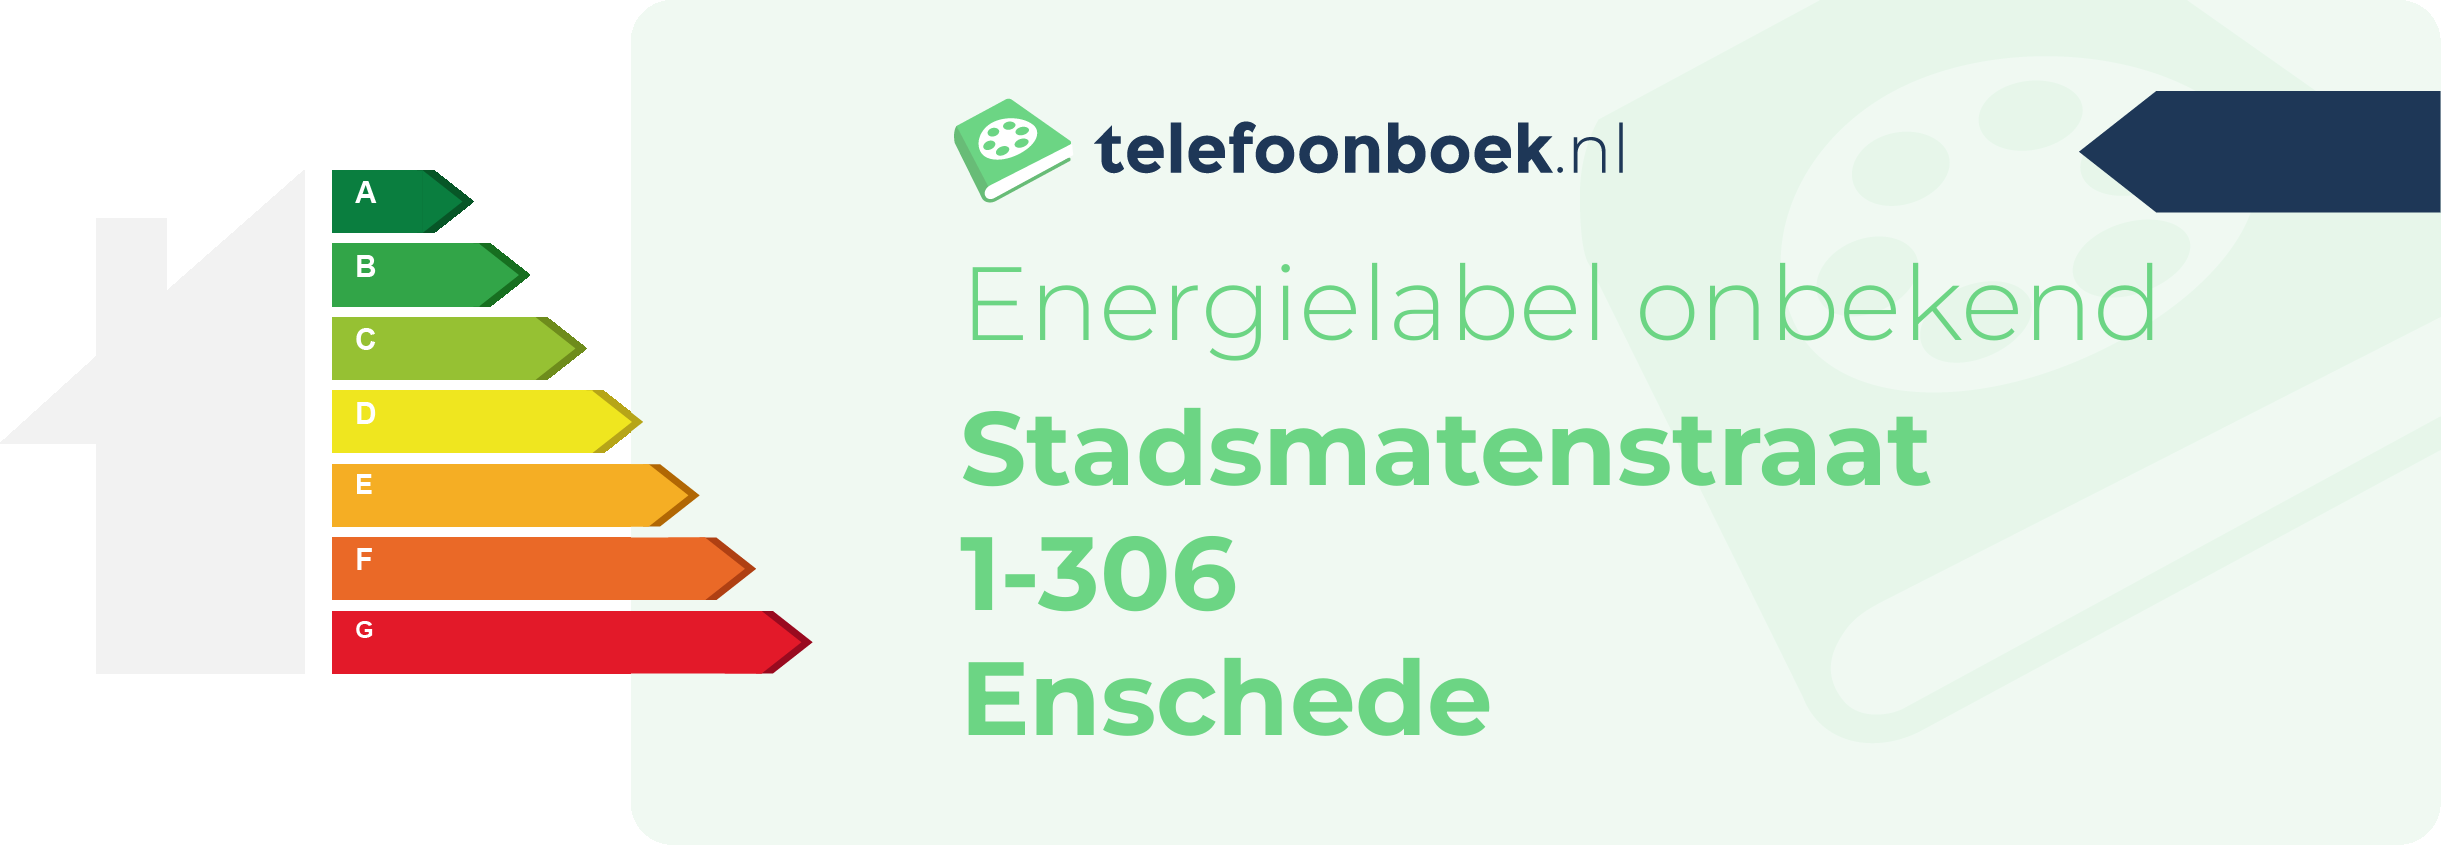 Energielabel Stadsmatenstraat 1-306 Enschede